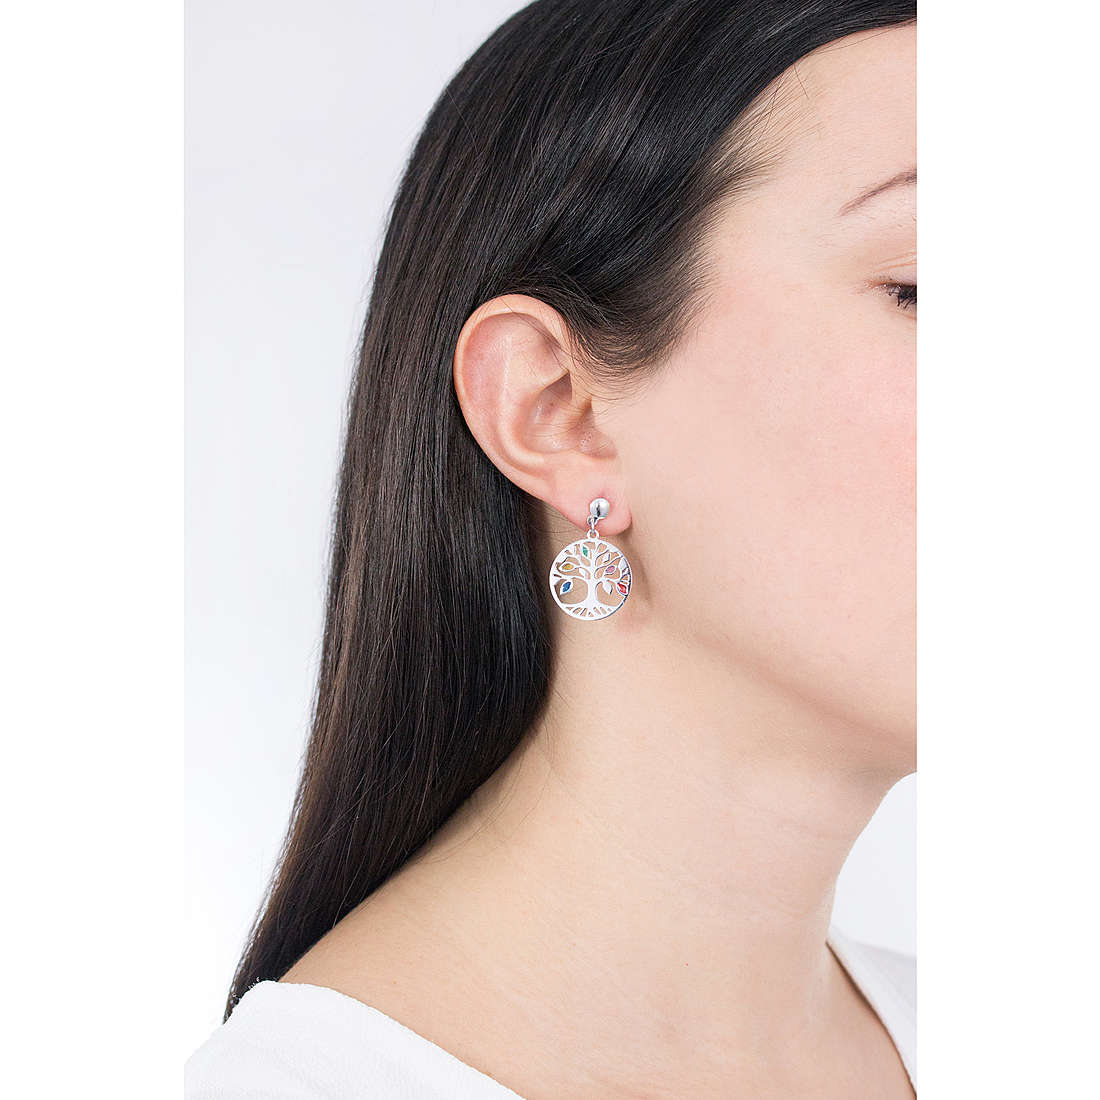 GioiaPura earrings woman GYOARW0246-S wearing